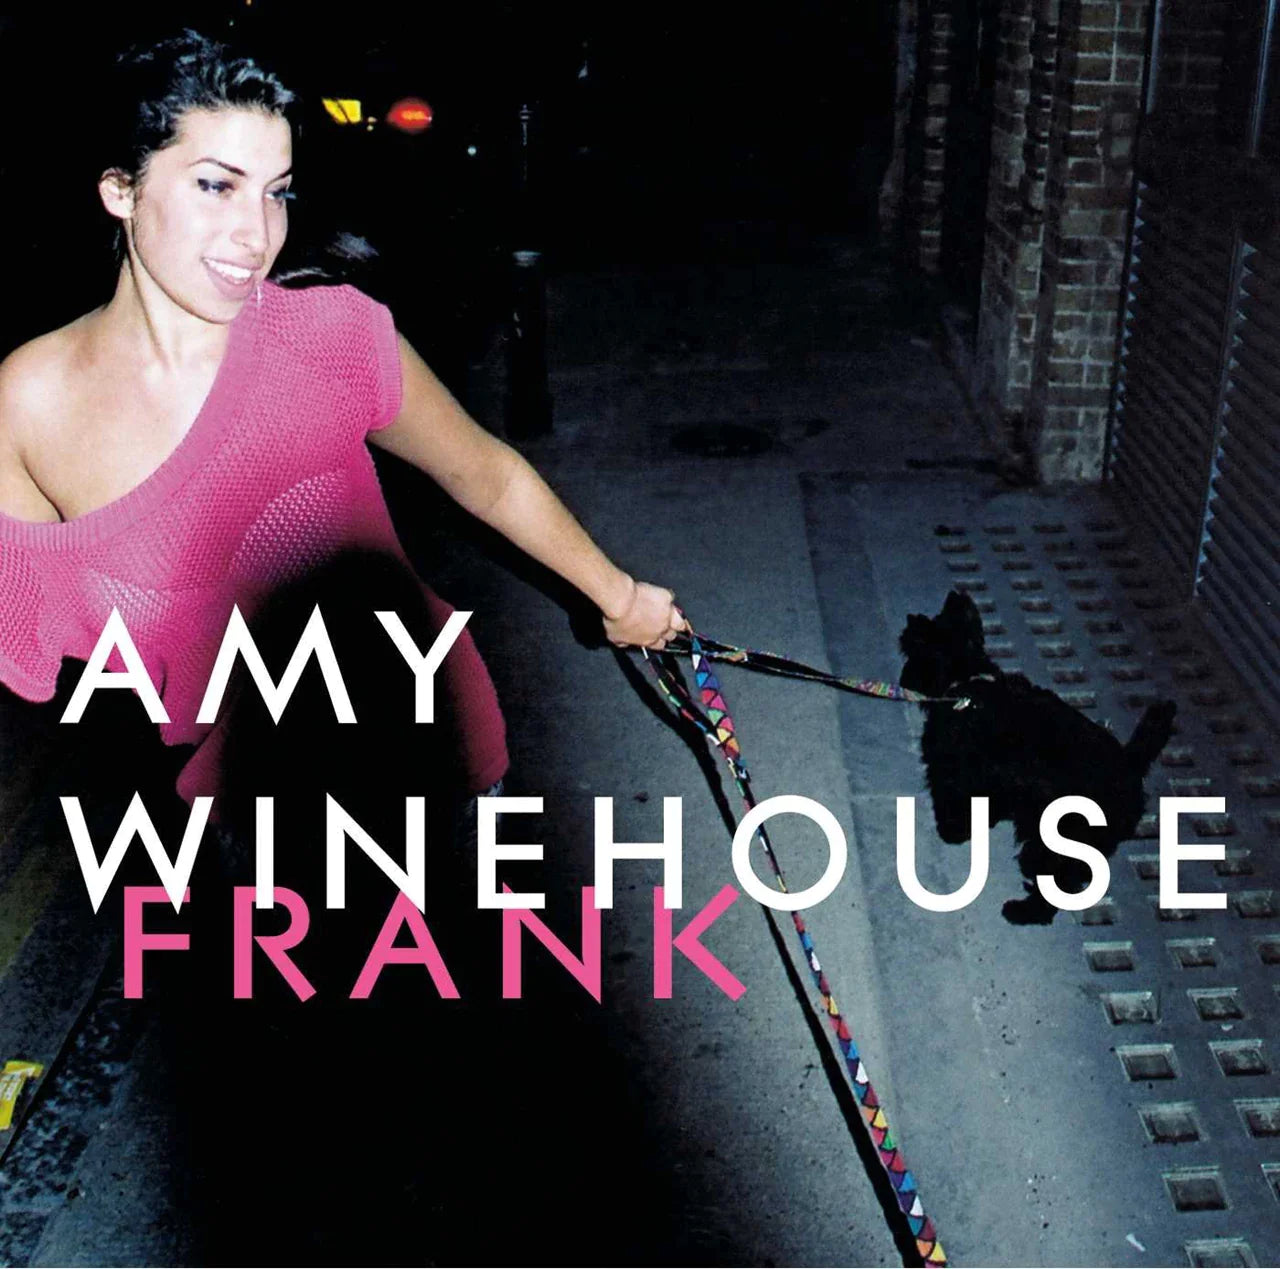 Amy Winehouse - Frank